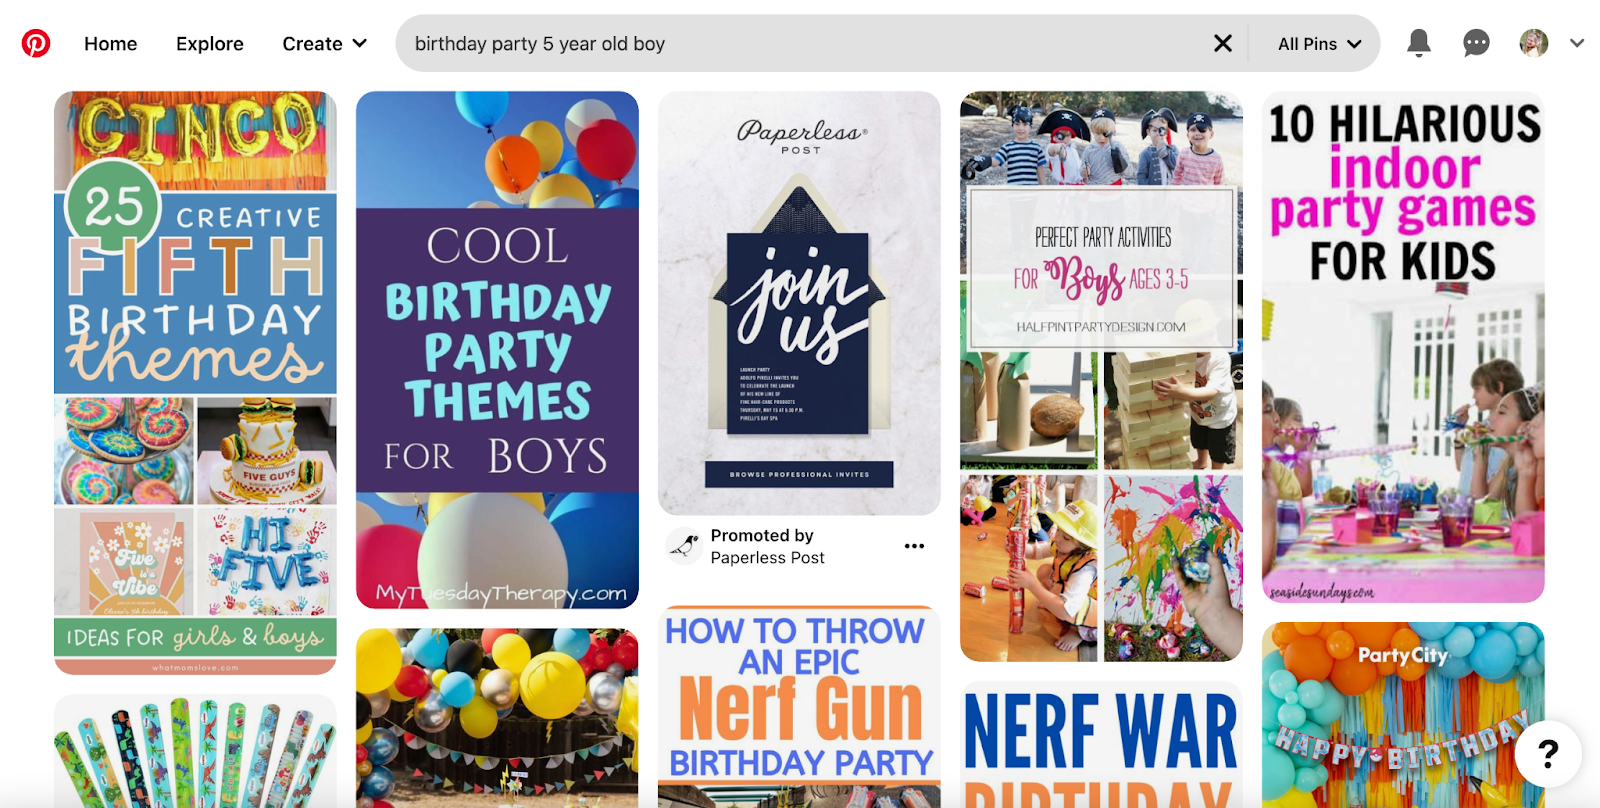 birthday party ideas on Pinterest, long-tail keywords, SEO